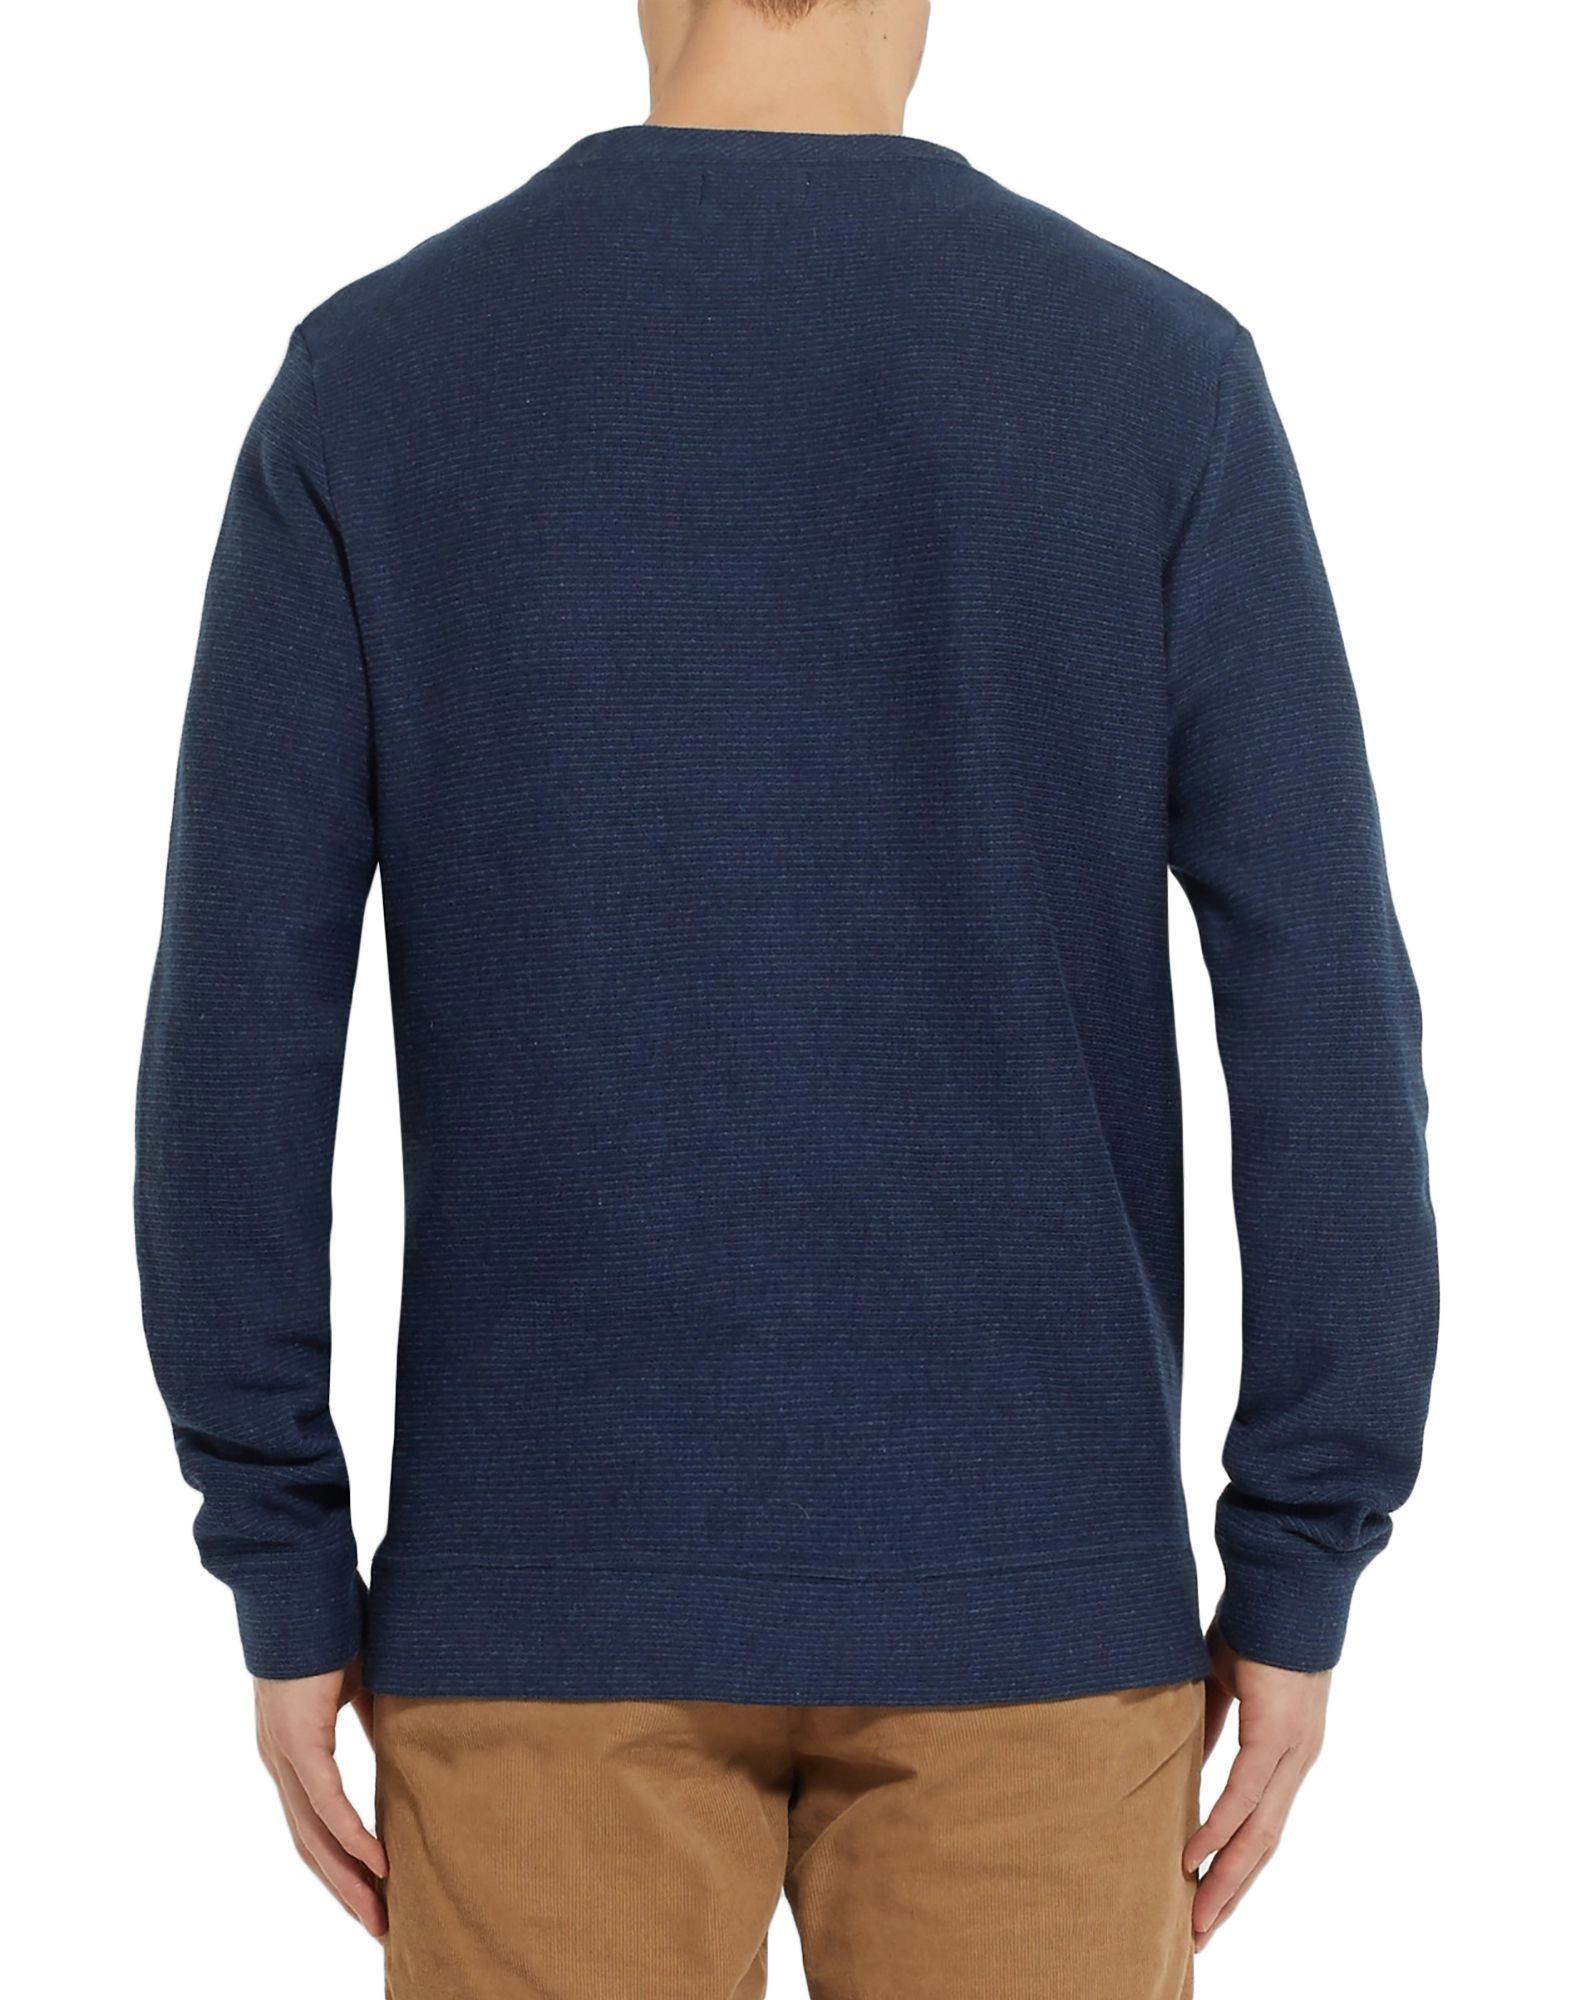 Oliver Spencer Sweater in Dark Blue (Blue) for Men - Lyst